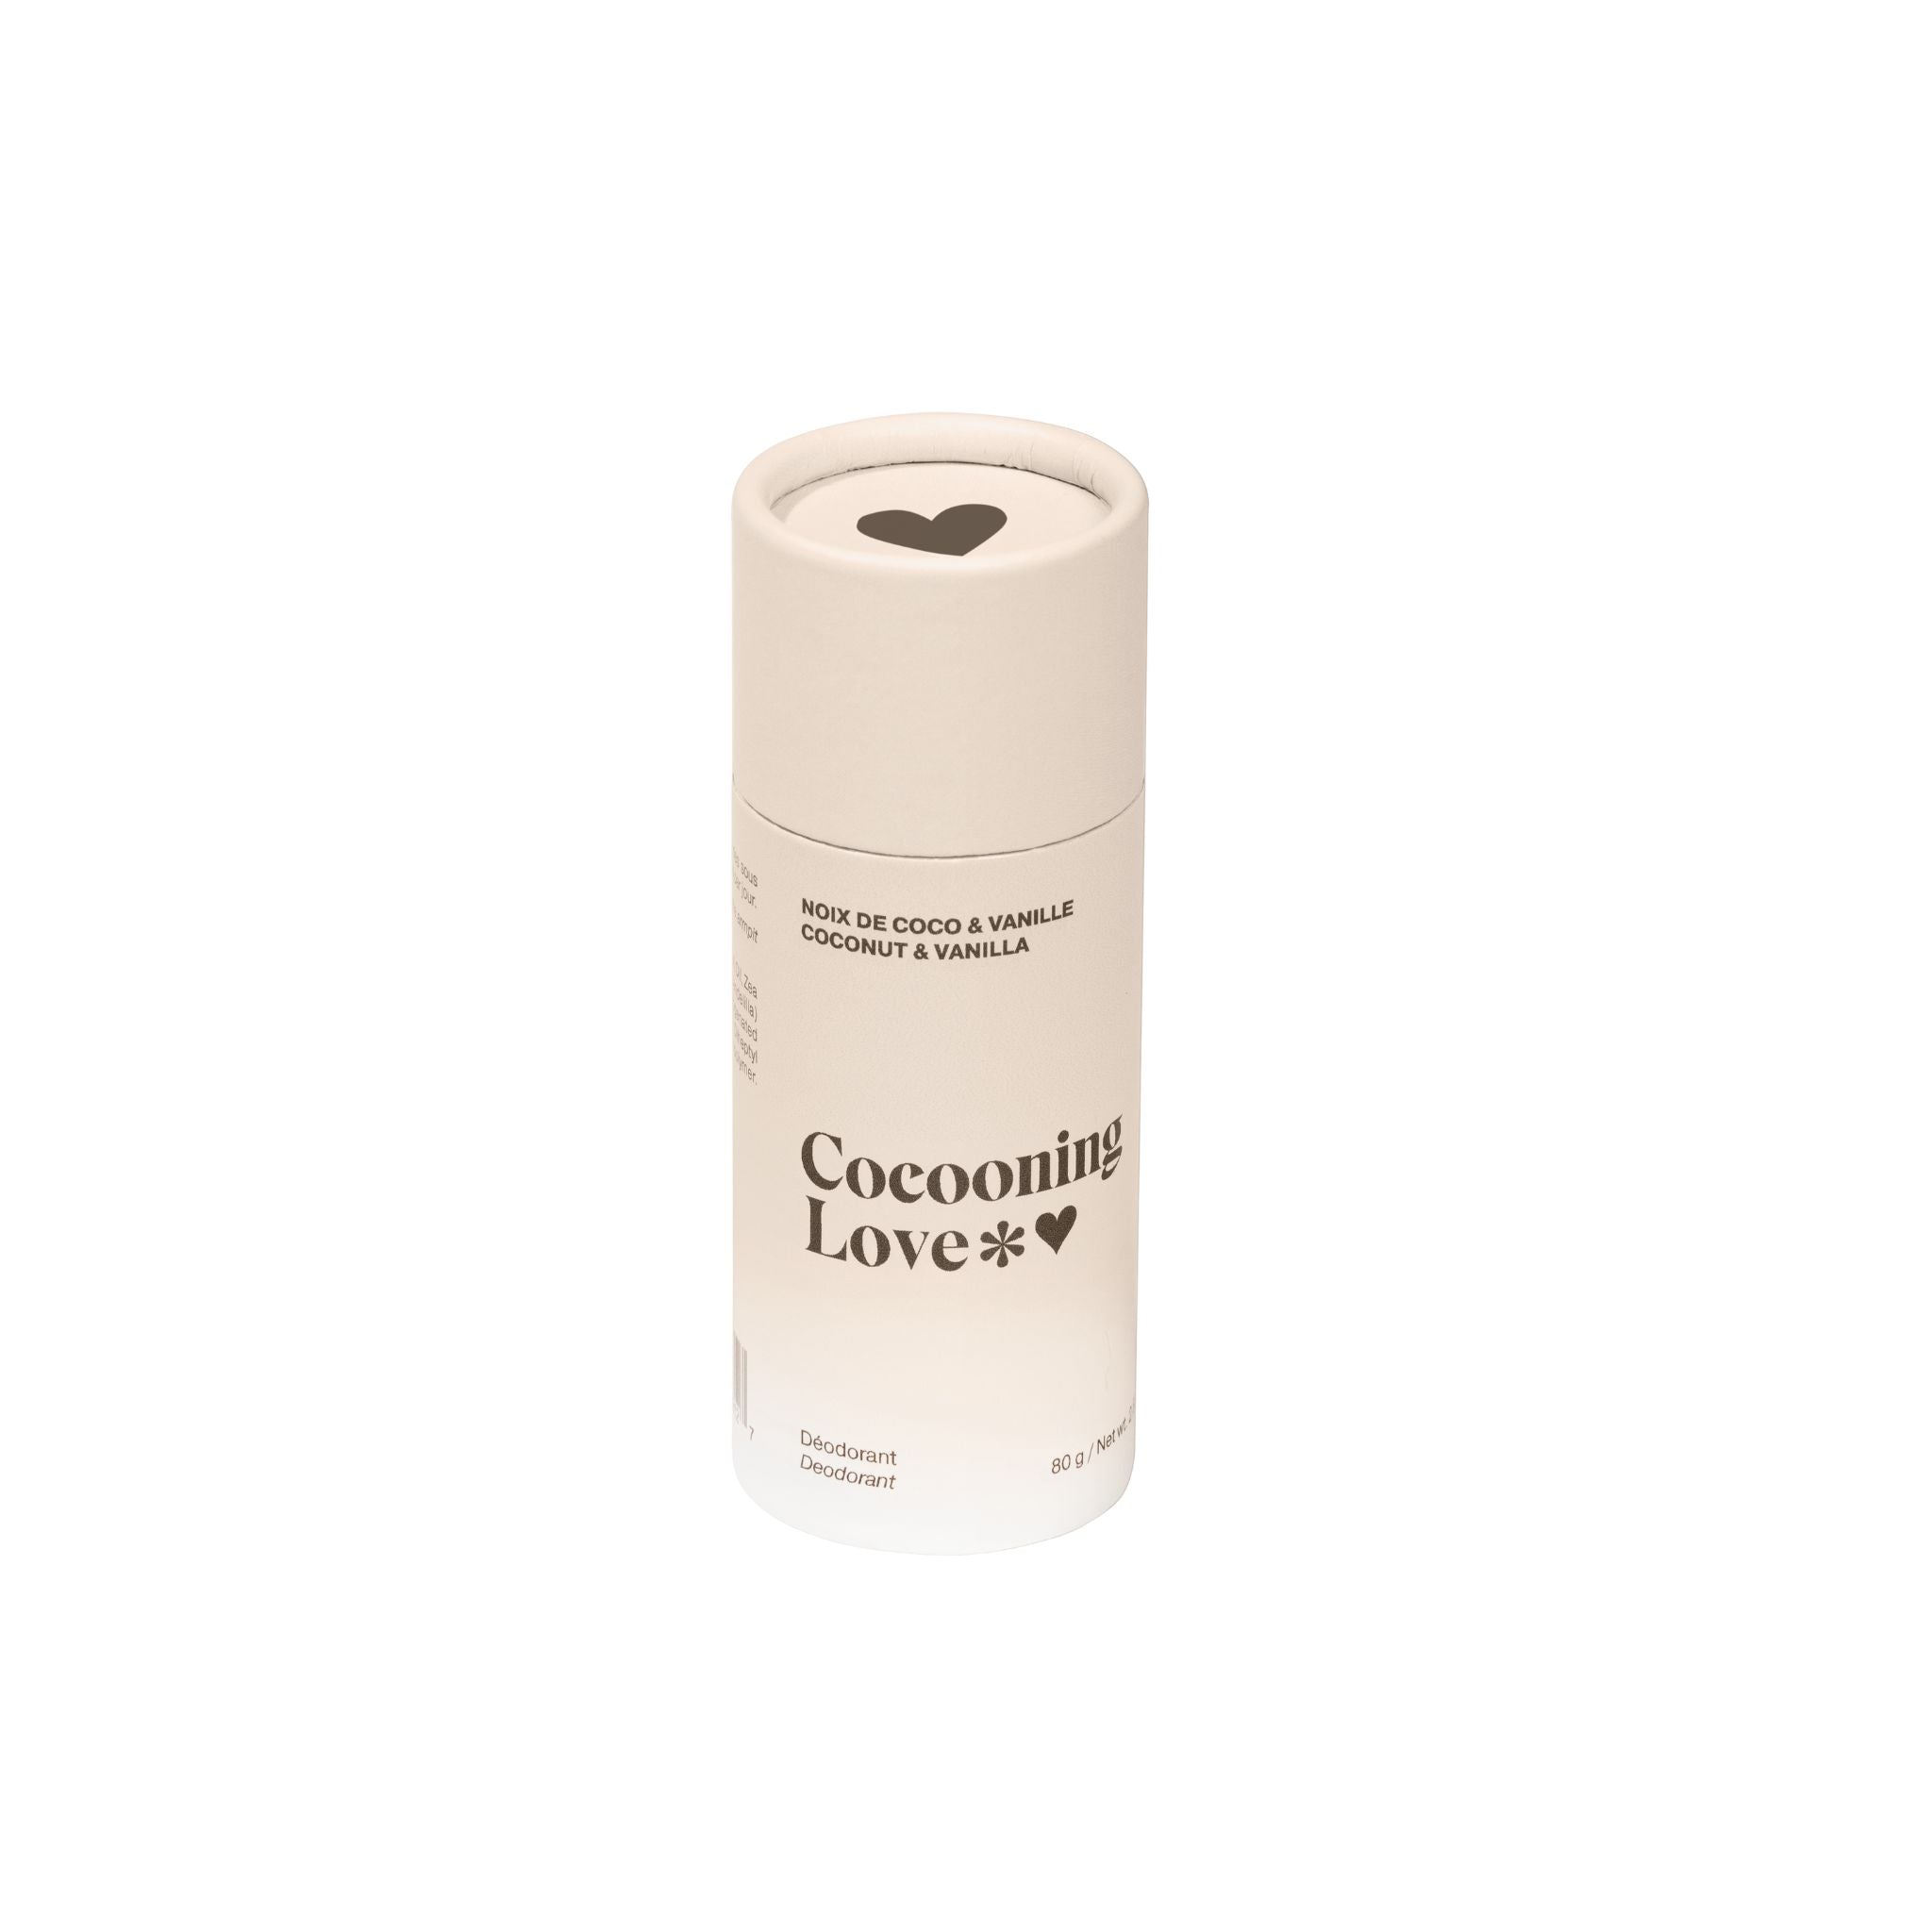 Cocooning Love. Deodorant Vegan Peaux Sensibles Coconut et Vanille - 80 g - Concept C. Shop